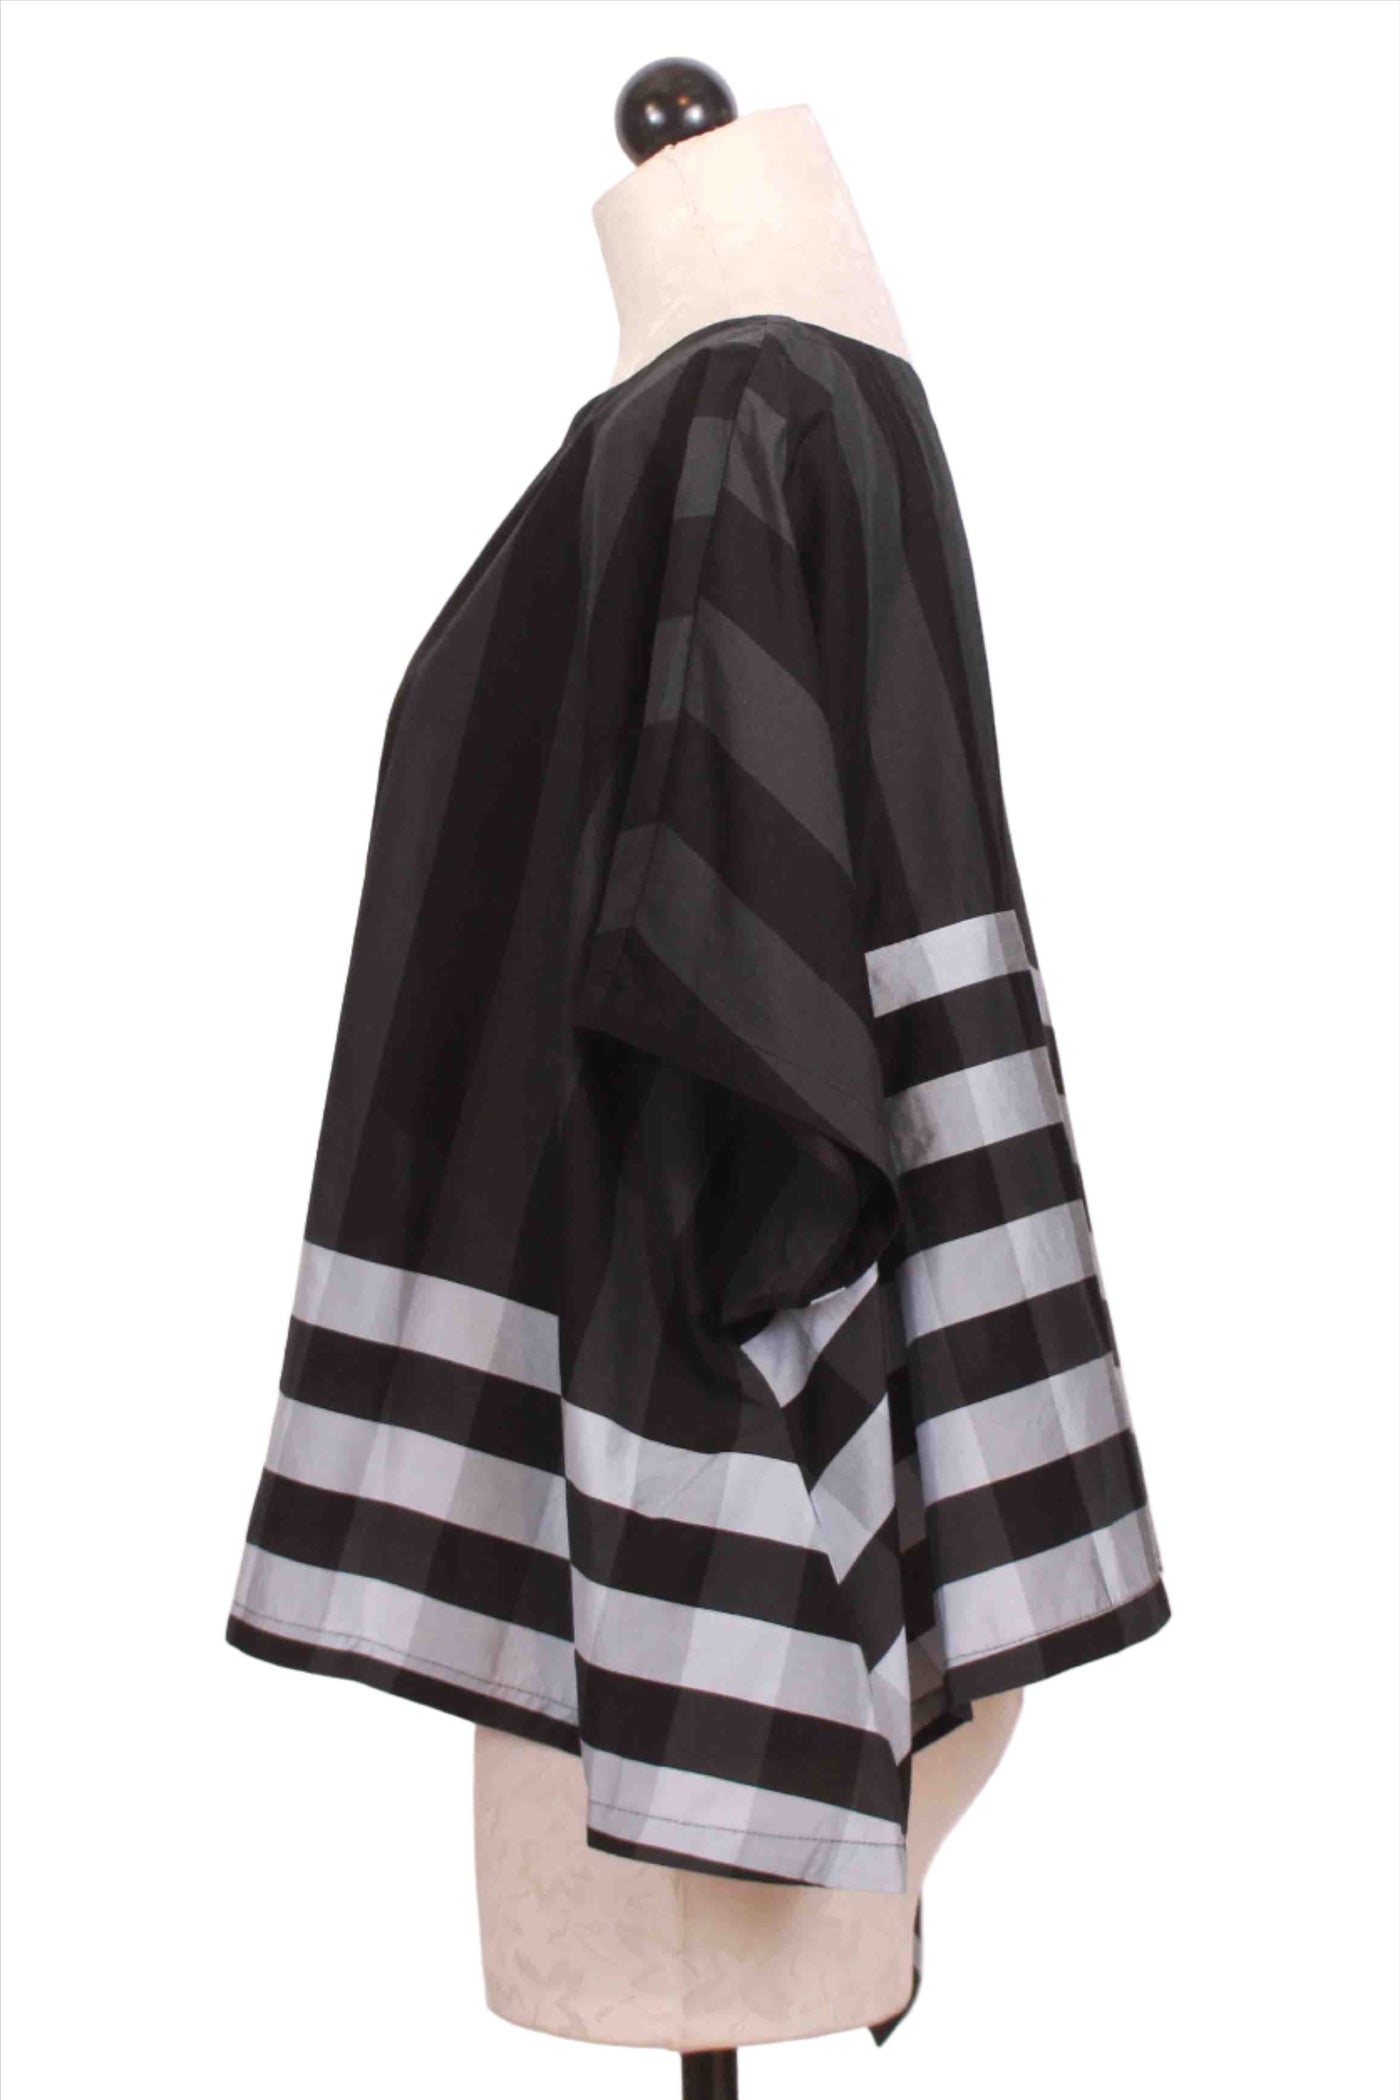 side view of Black/Grey/White Mixed Plaid and Stripe Taffeta Top by Moyuru